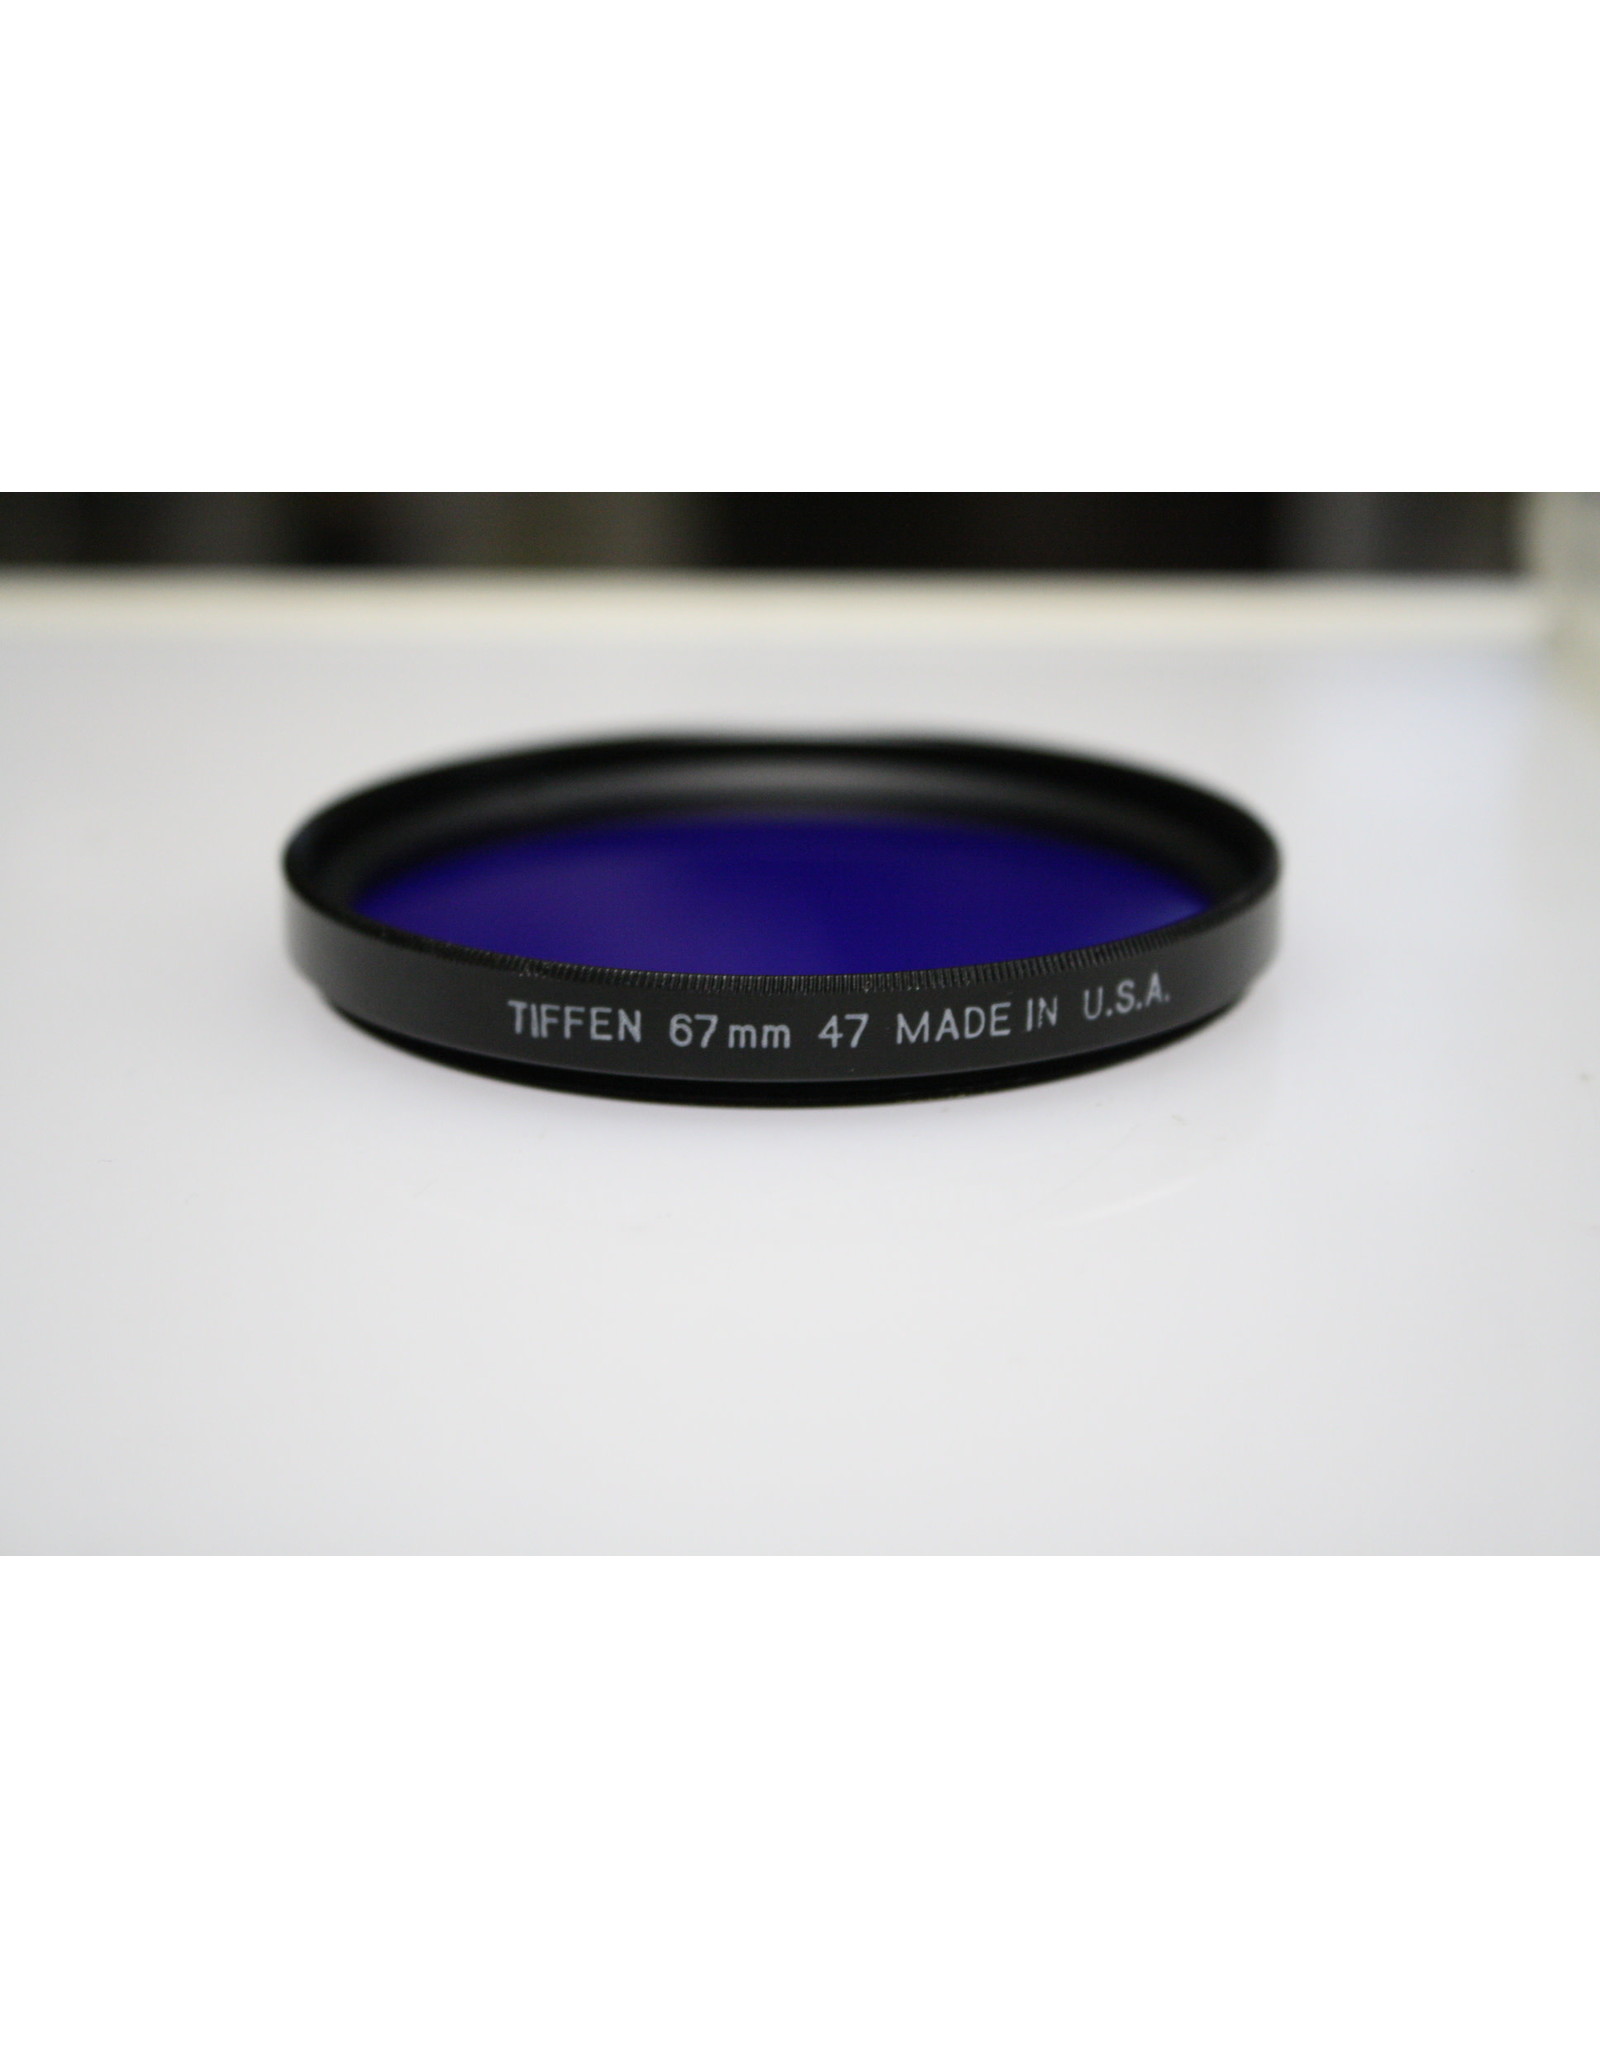 Tiffen Blue #47 67mm Filter